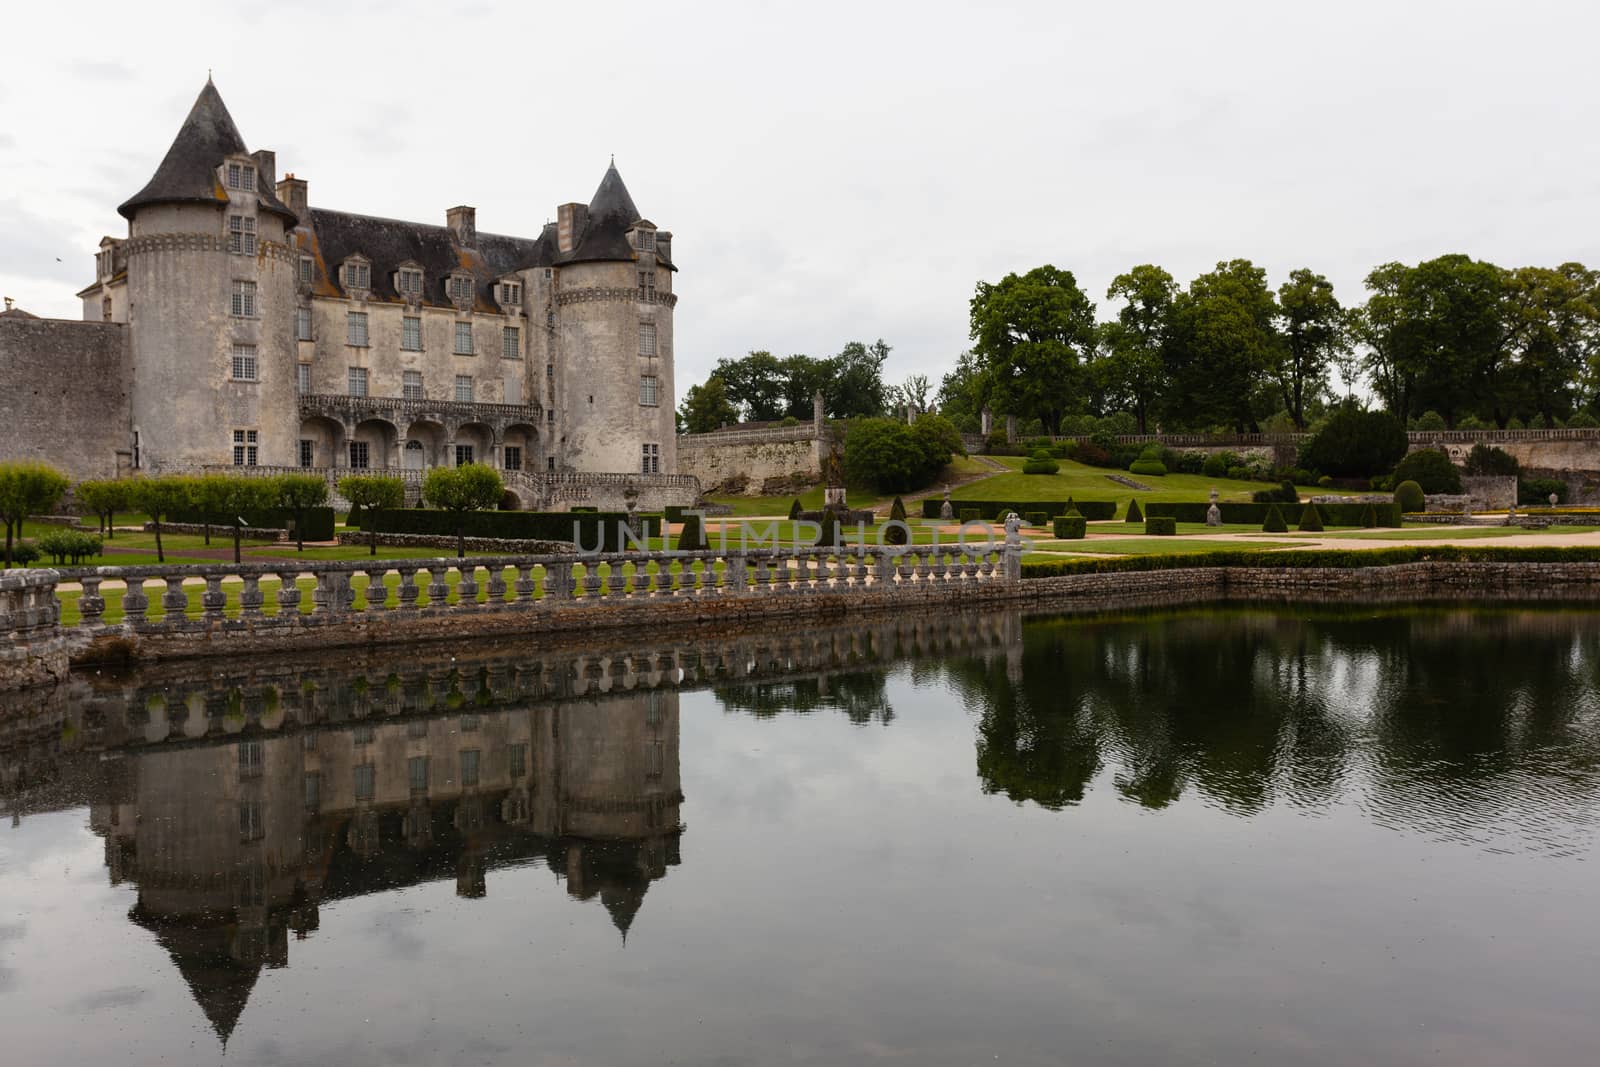 La Roche Courbon  castle in charente maritime region of France